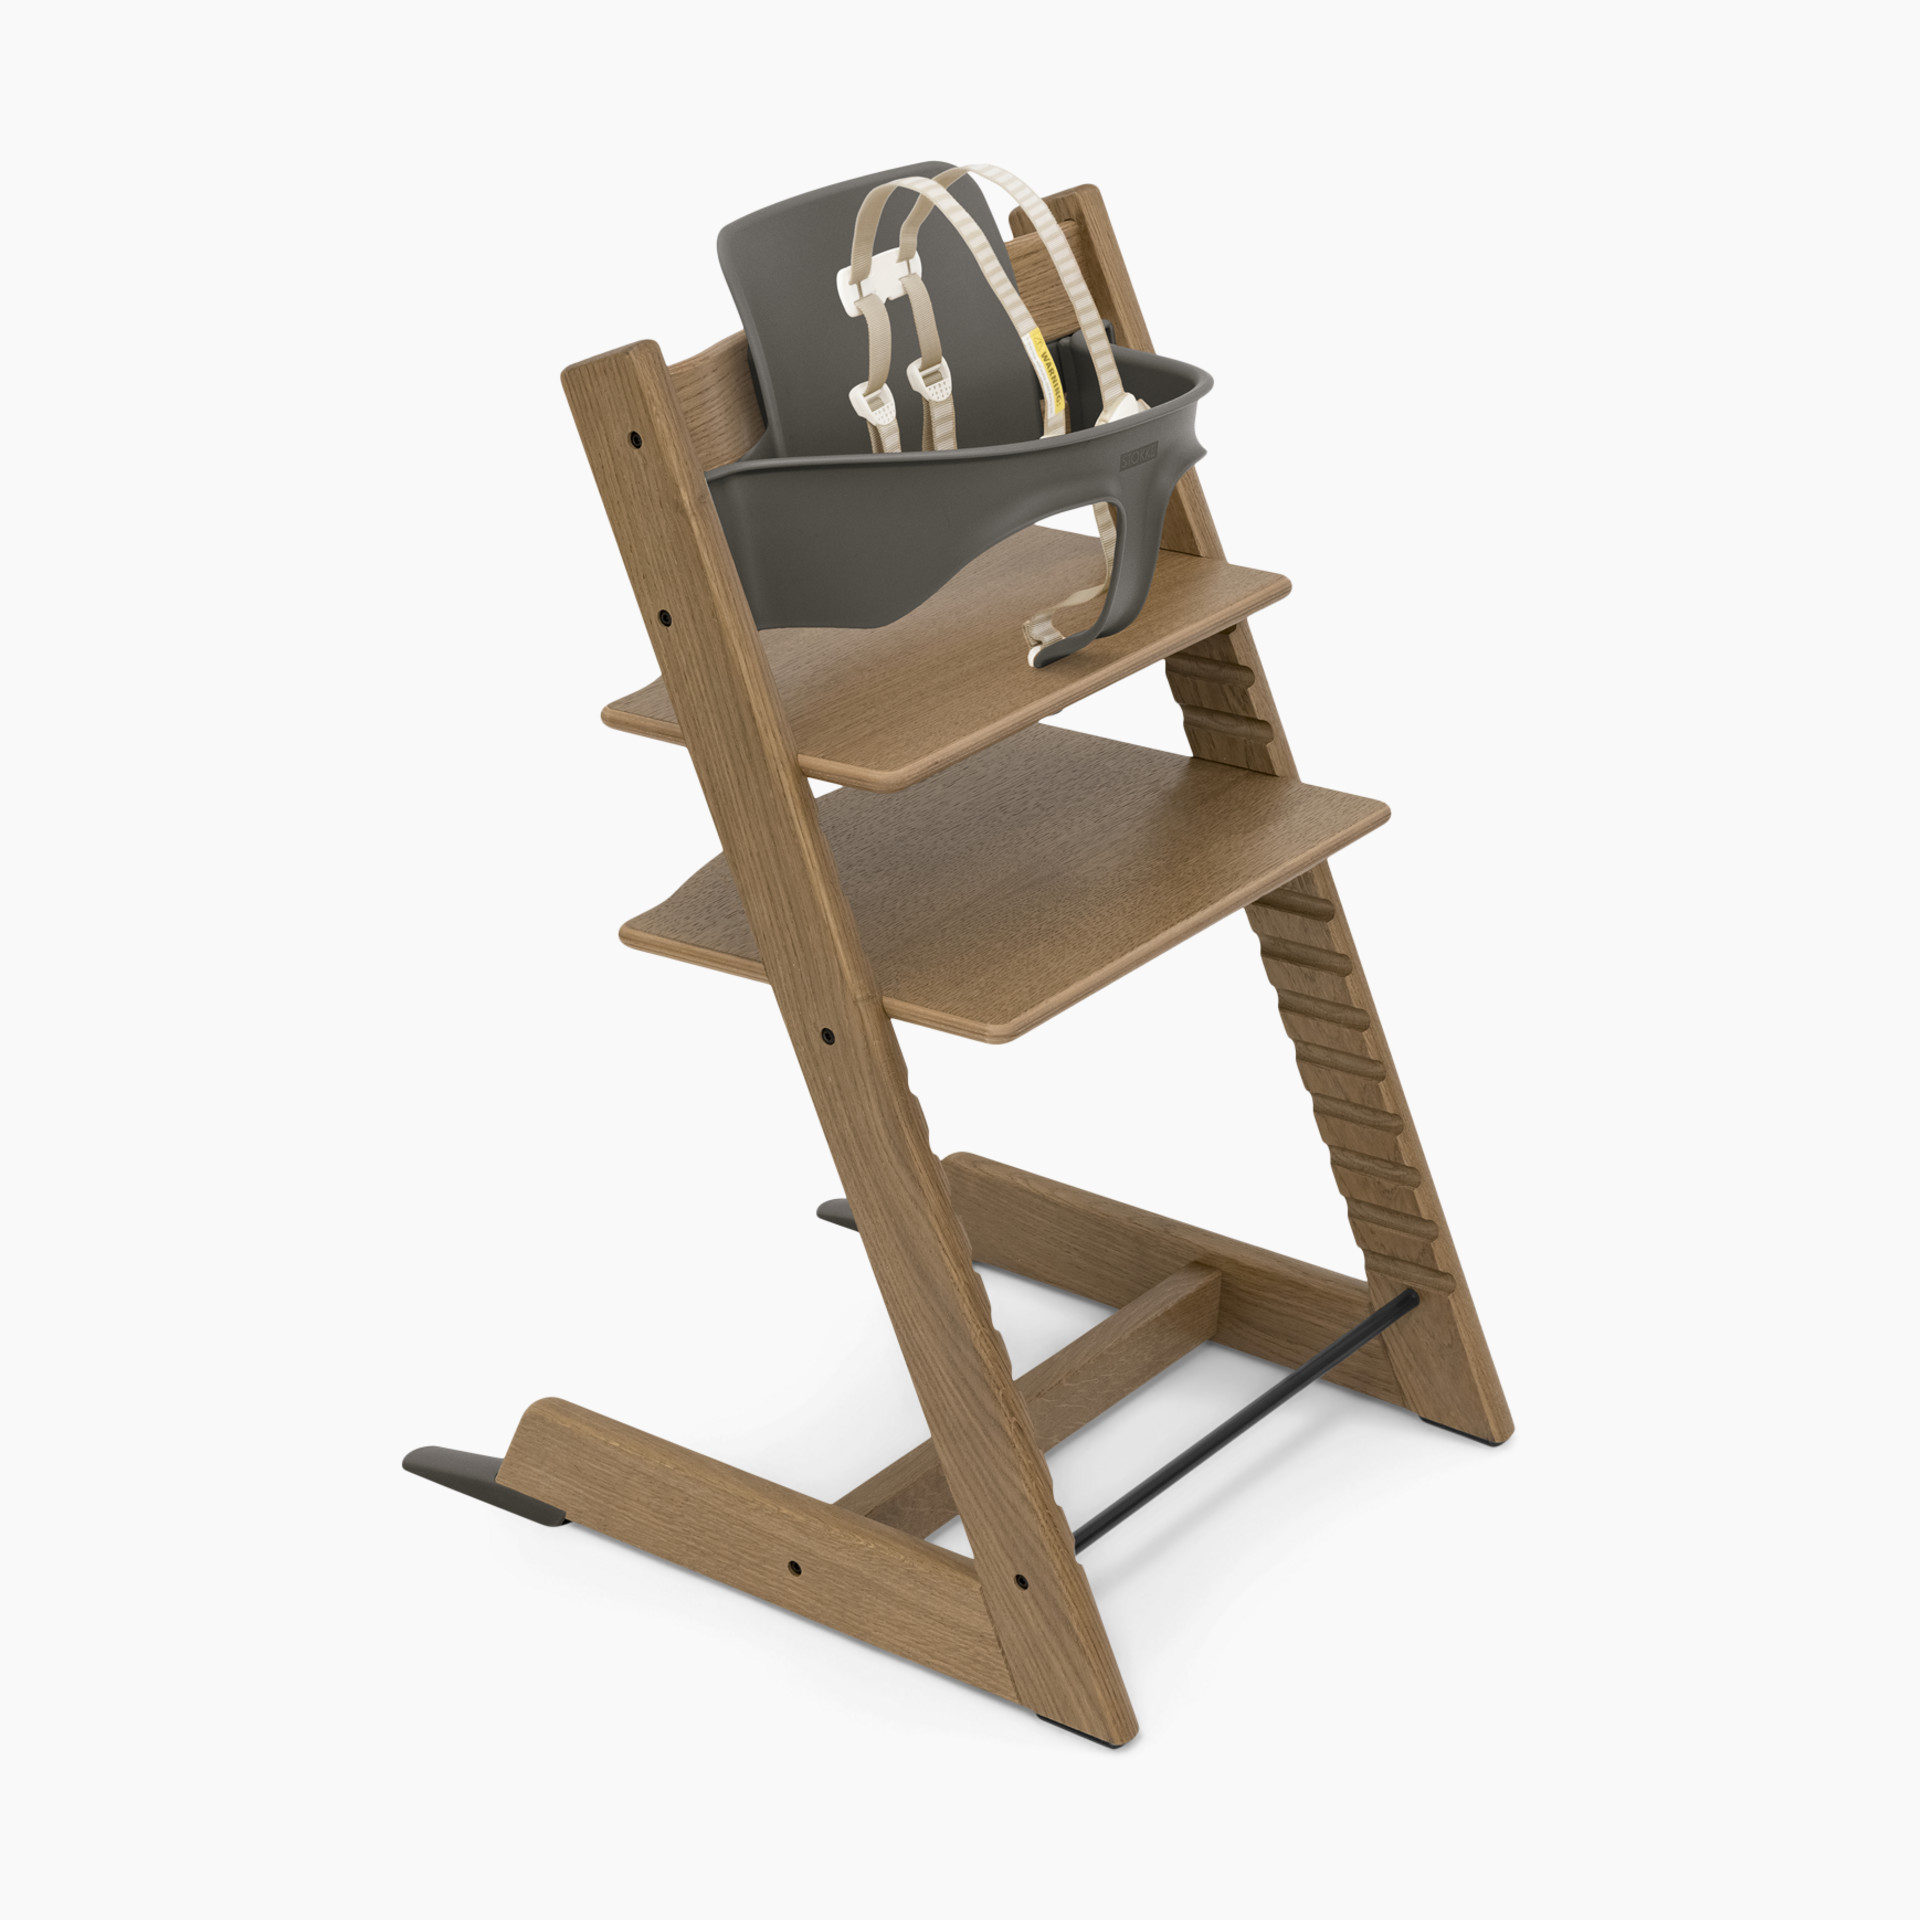 Stokke Tripp Trapp High Chair - Hazy Grey